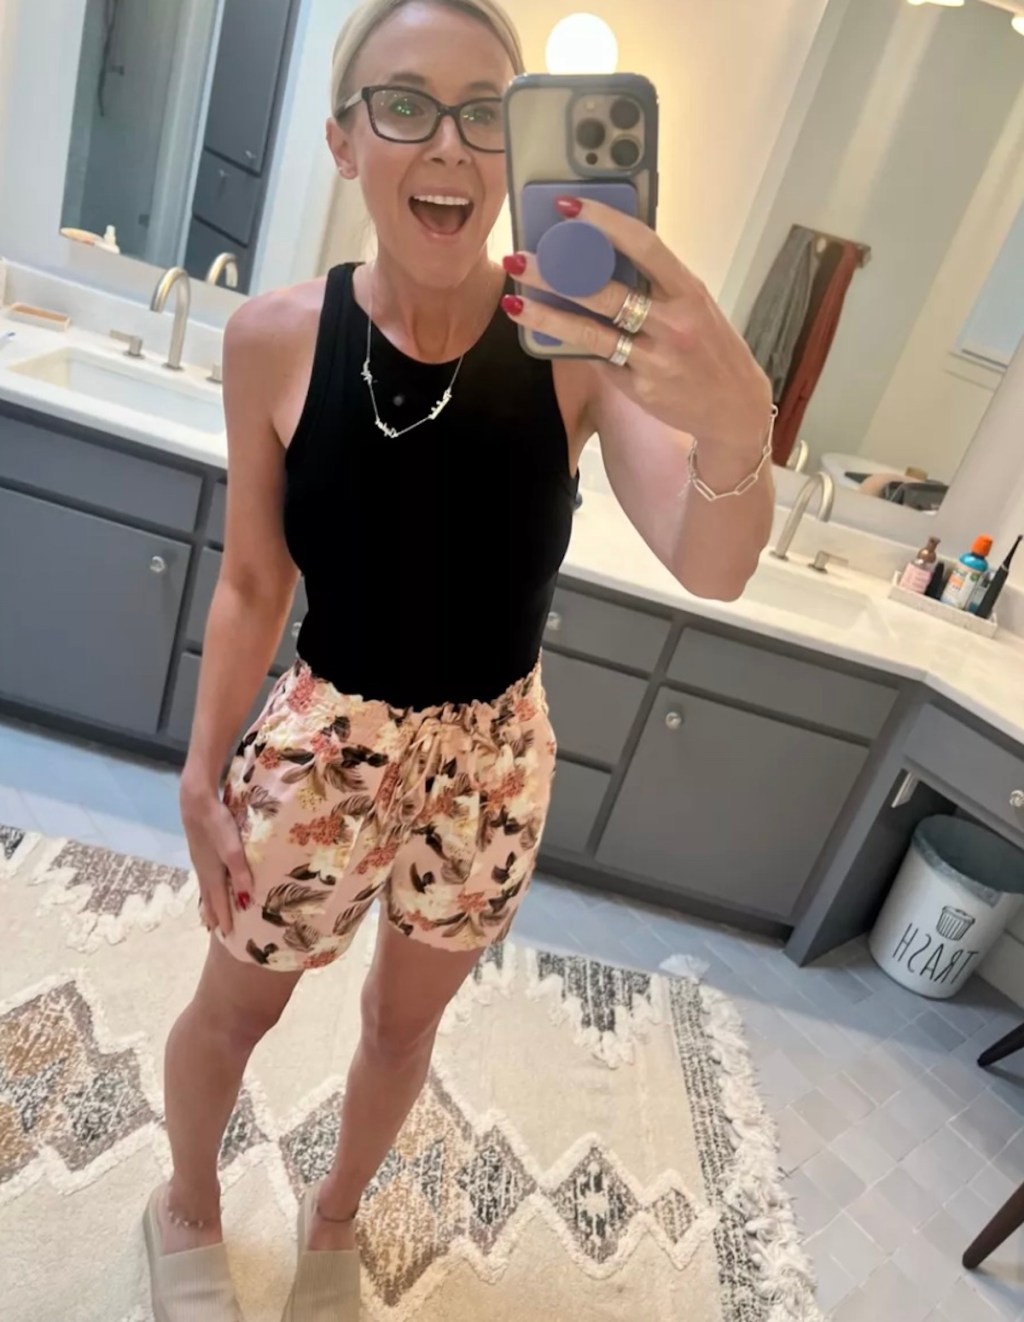 woman taking mirror selfie wearing black bodysuit and floral shorts in bathroom